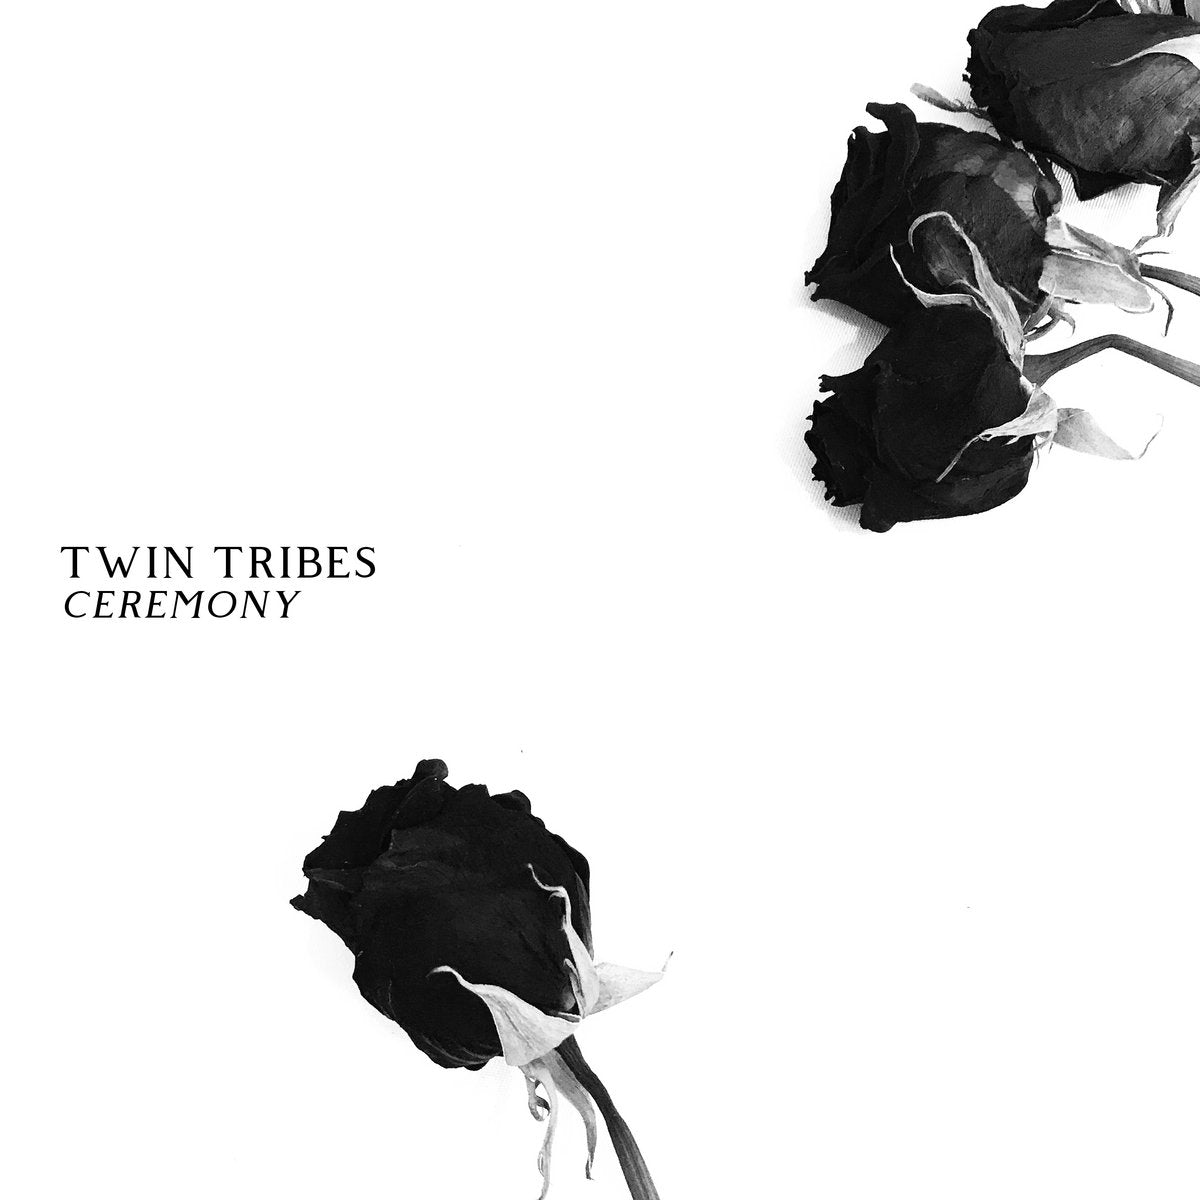 TWIN TRIBES "Ceremony" LP